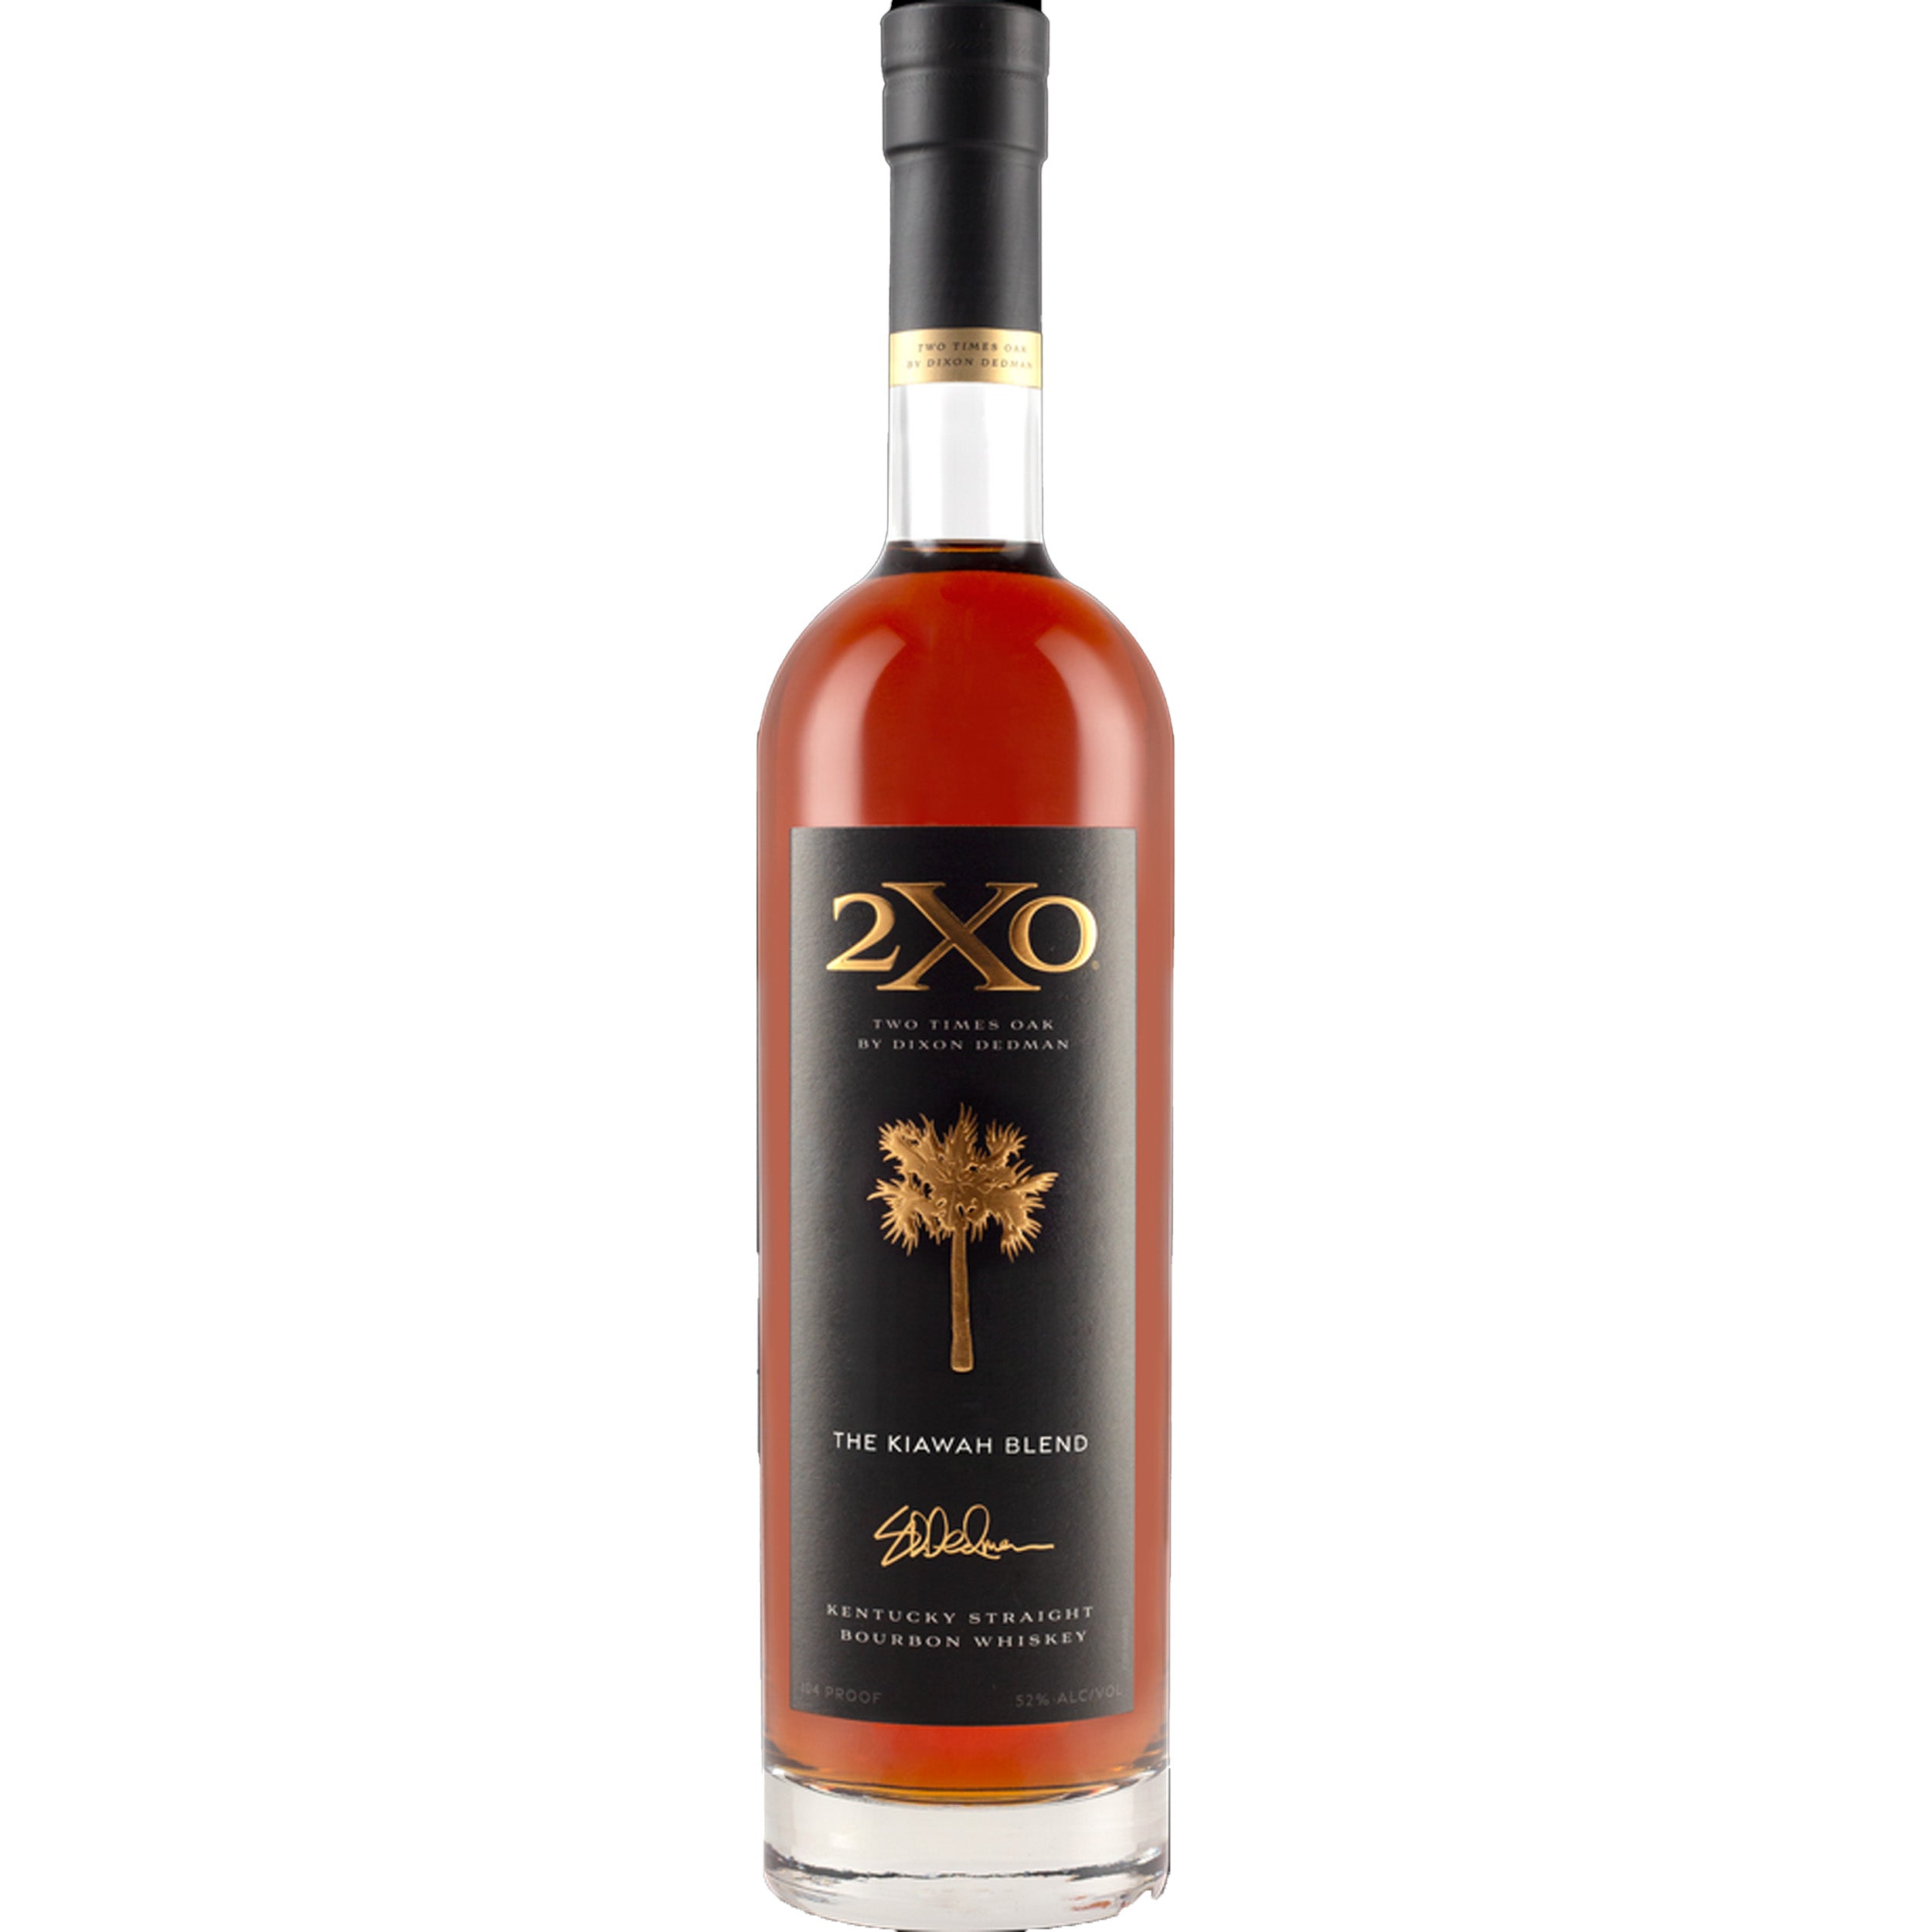 2XO "The Kiawah Blend" Bourbon Whiskey